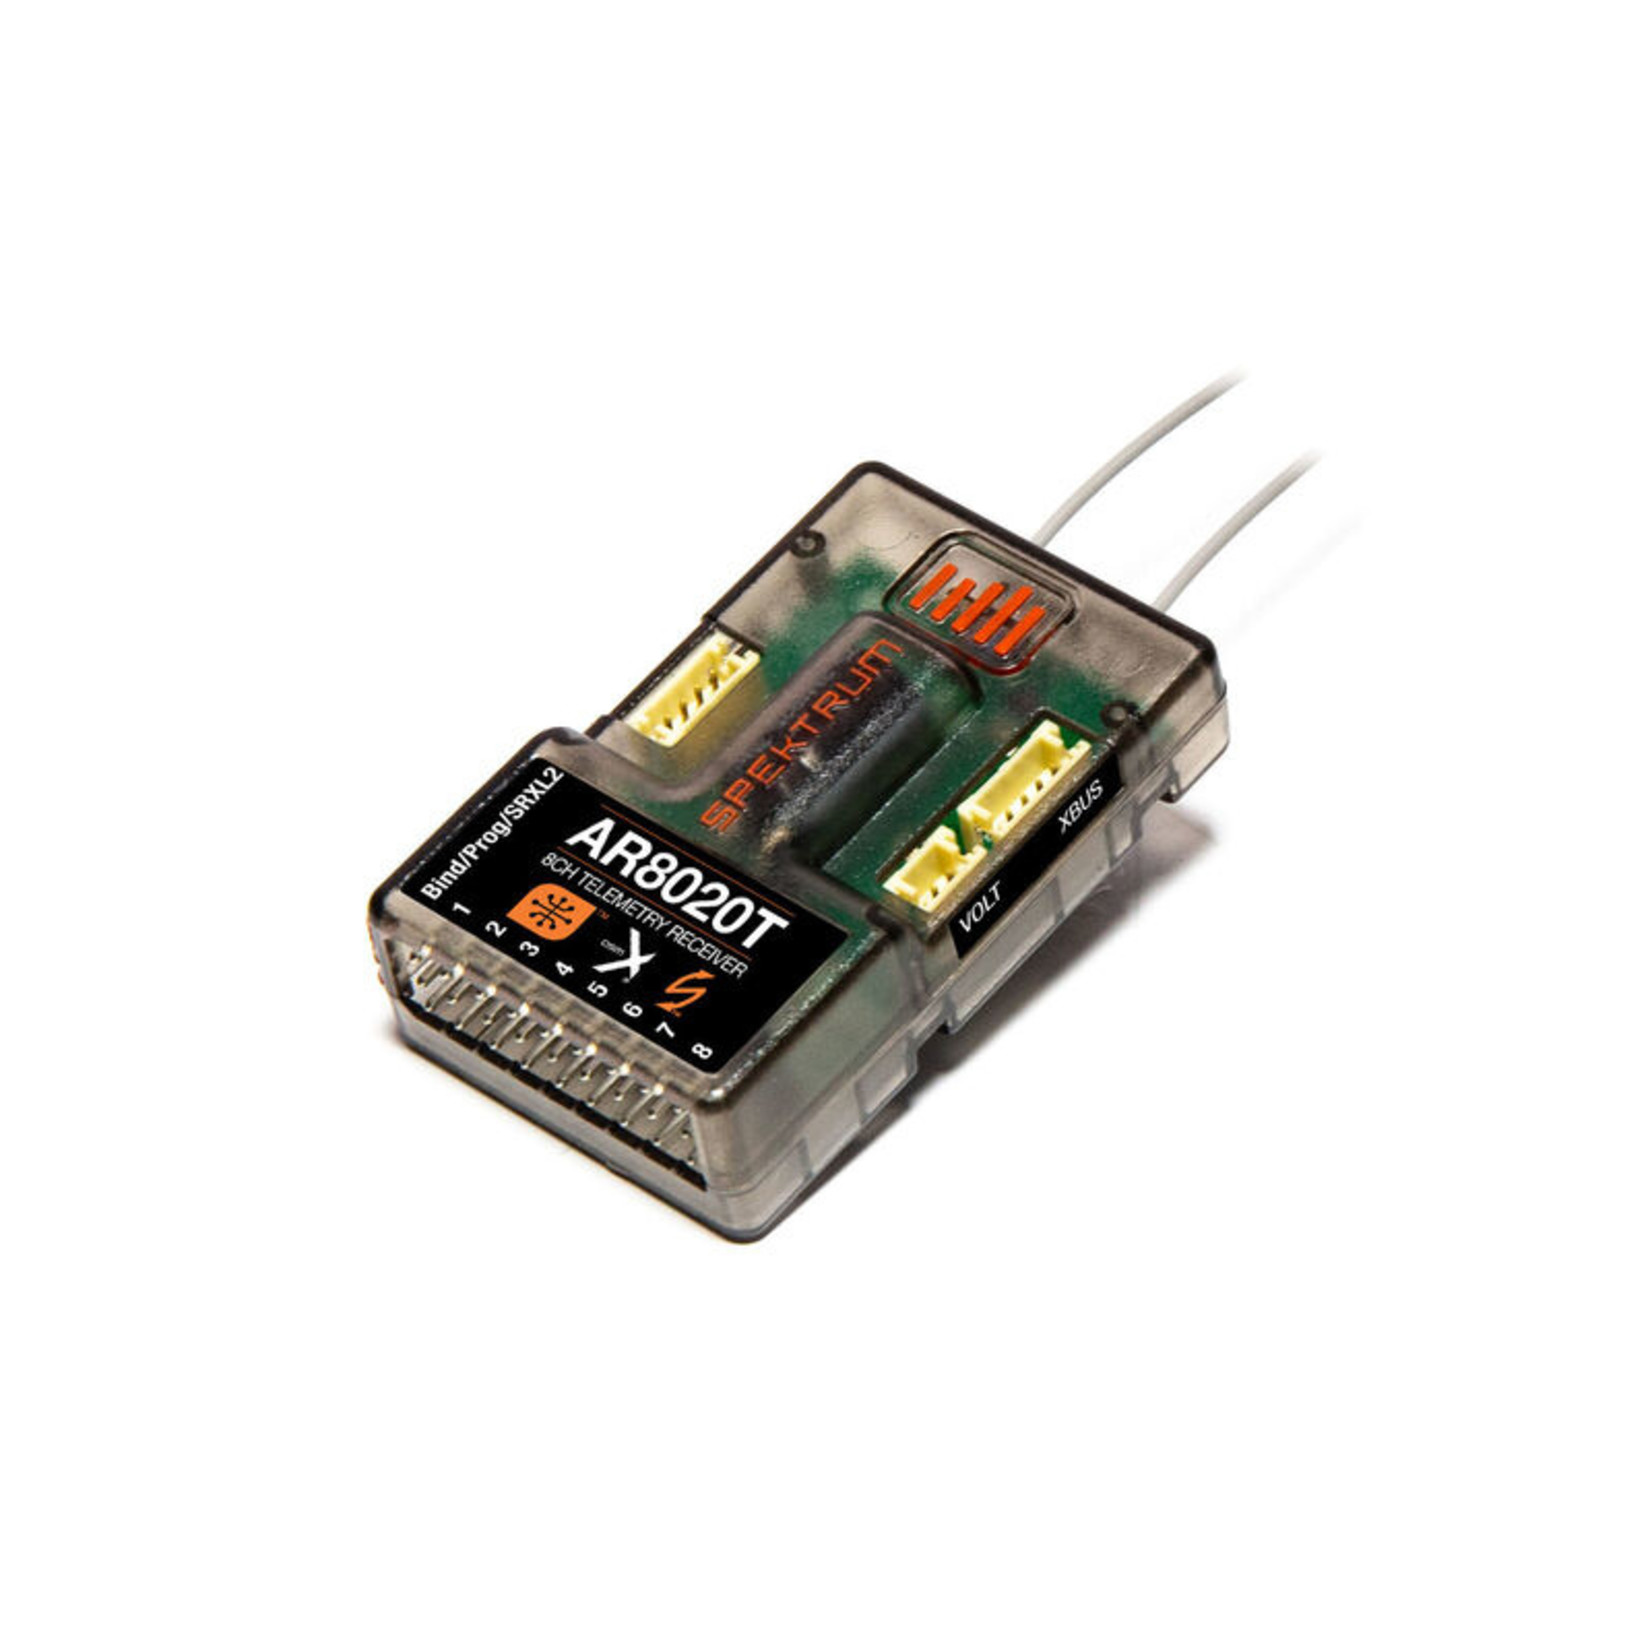 SPECKTRUM SPM8200  NX8 8-Channel DSMX Transmitter with AR8020T Telemetry Receiver